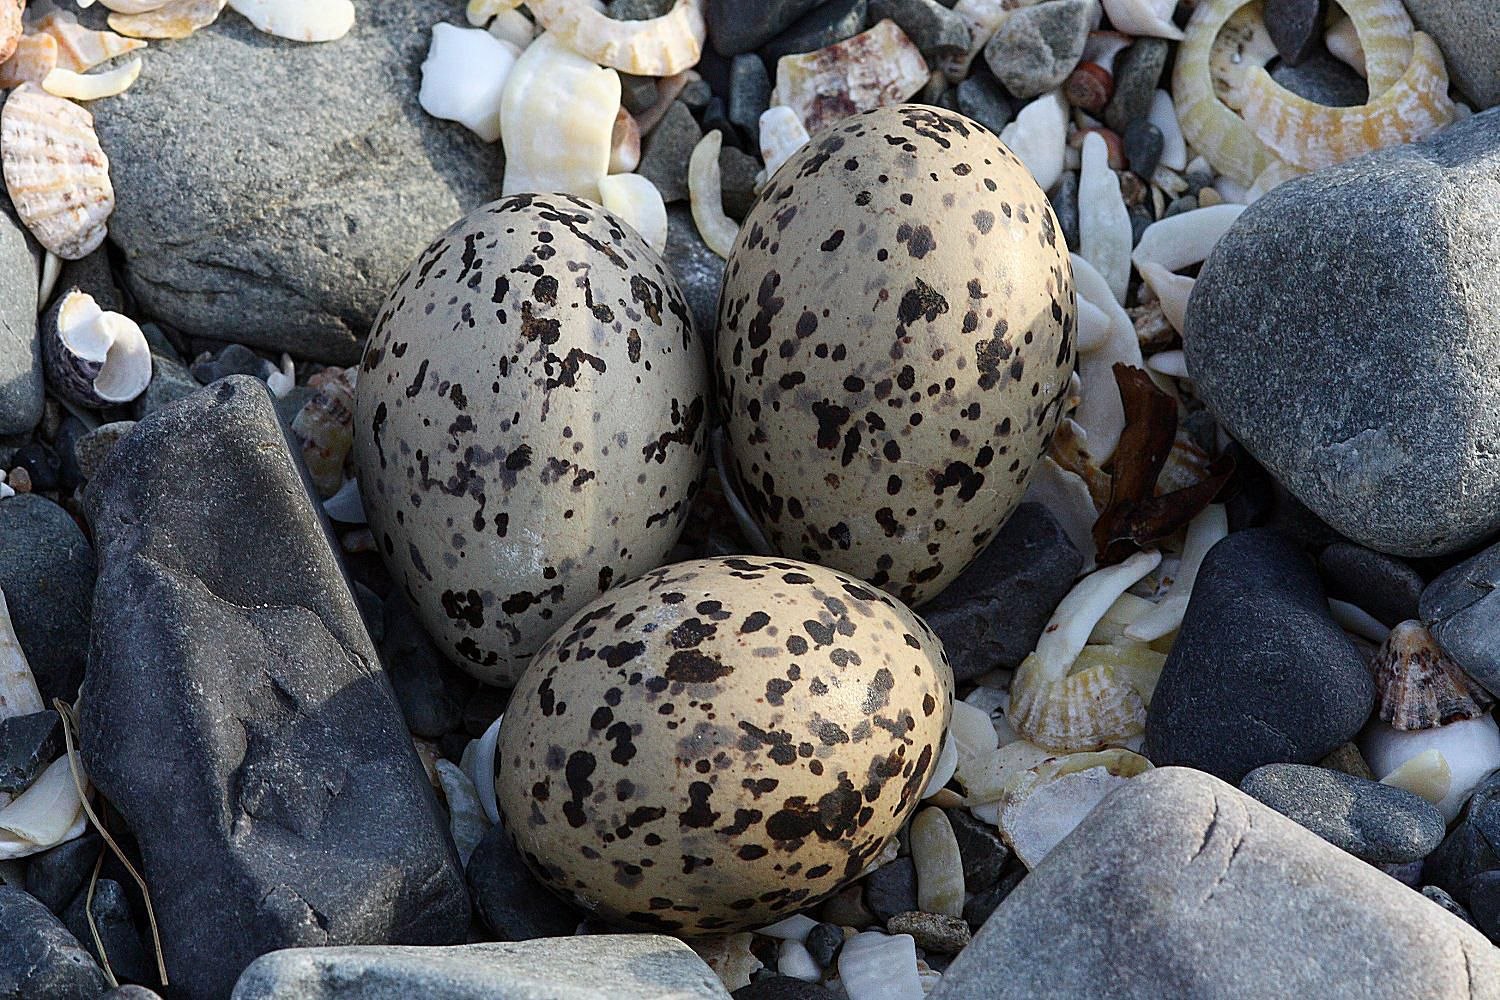 Яйца птиц покрыты